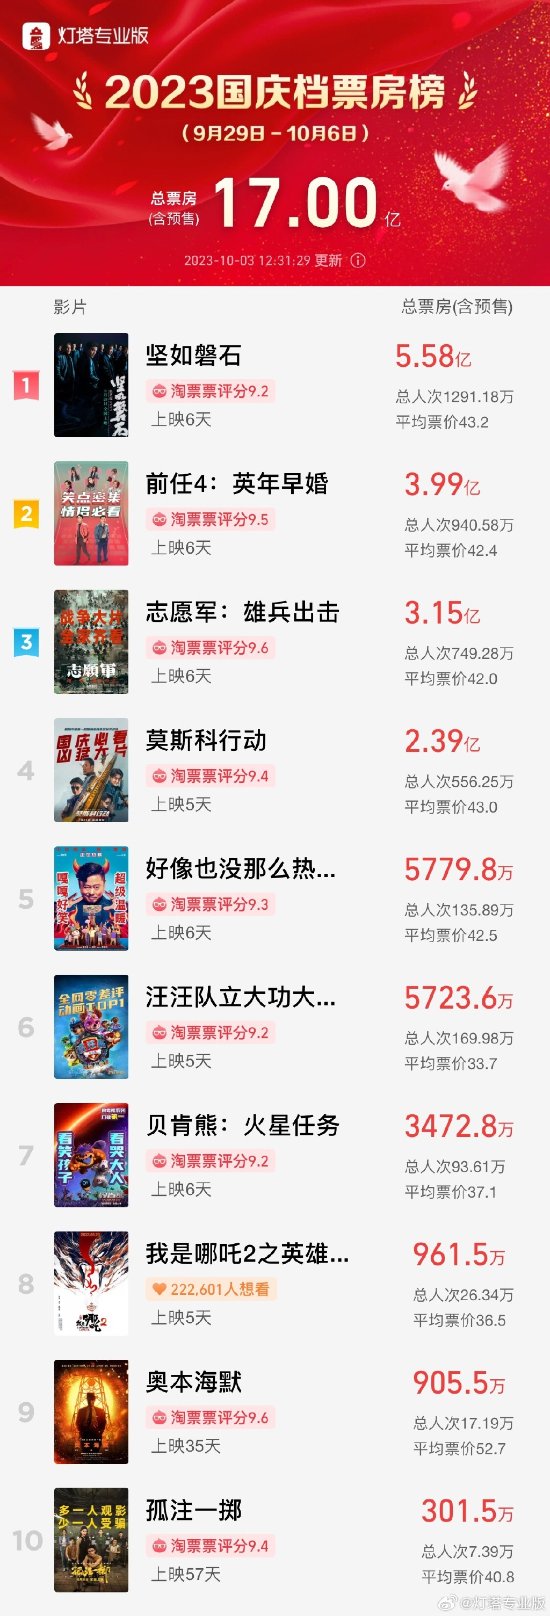 2023 National Day Box Office Breaks $1.7 Billion! Zhang Yimou's 